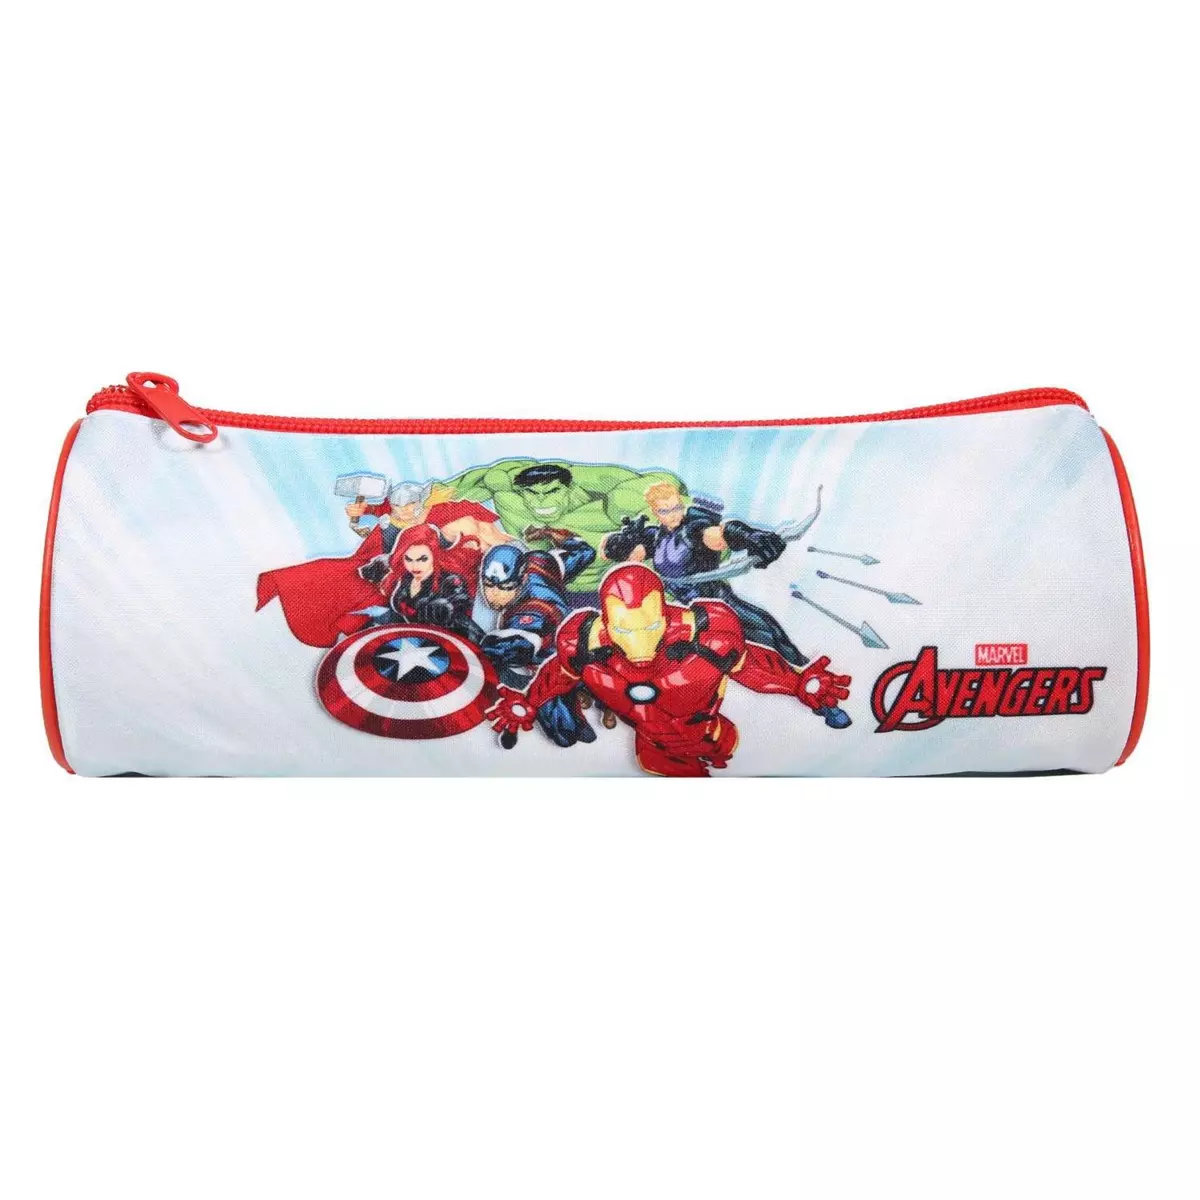 Bagtrotter BAGTROTTER Trousse scolaire ronde Marvel Avengers Multicolore